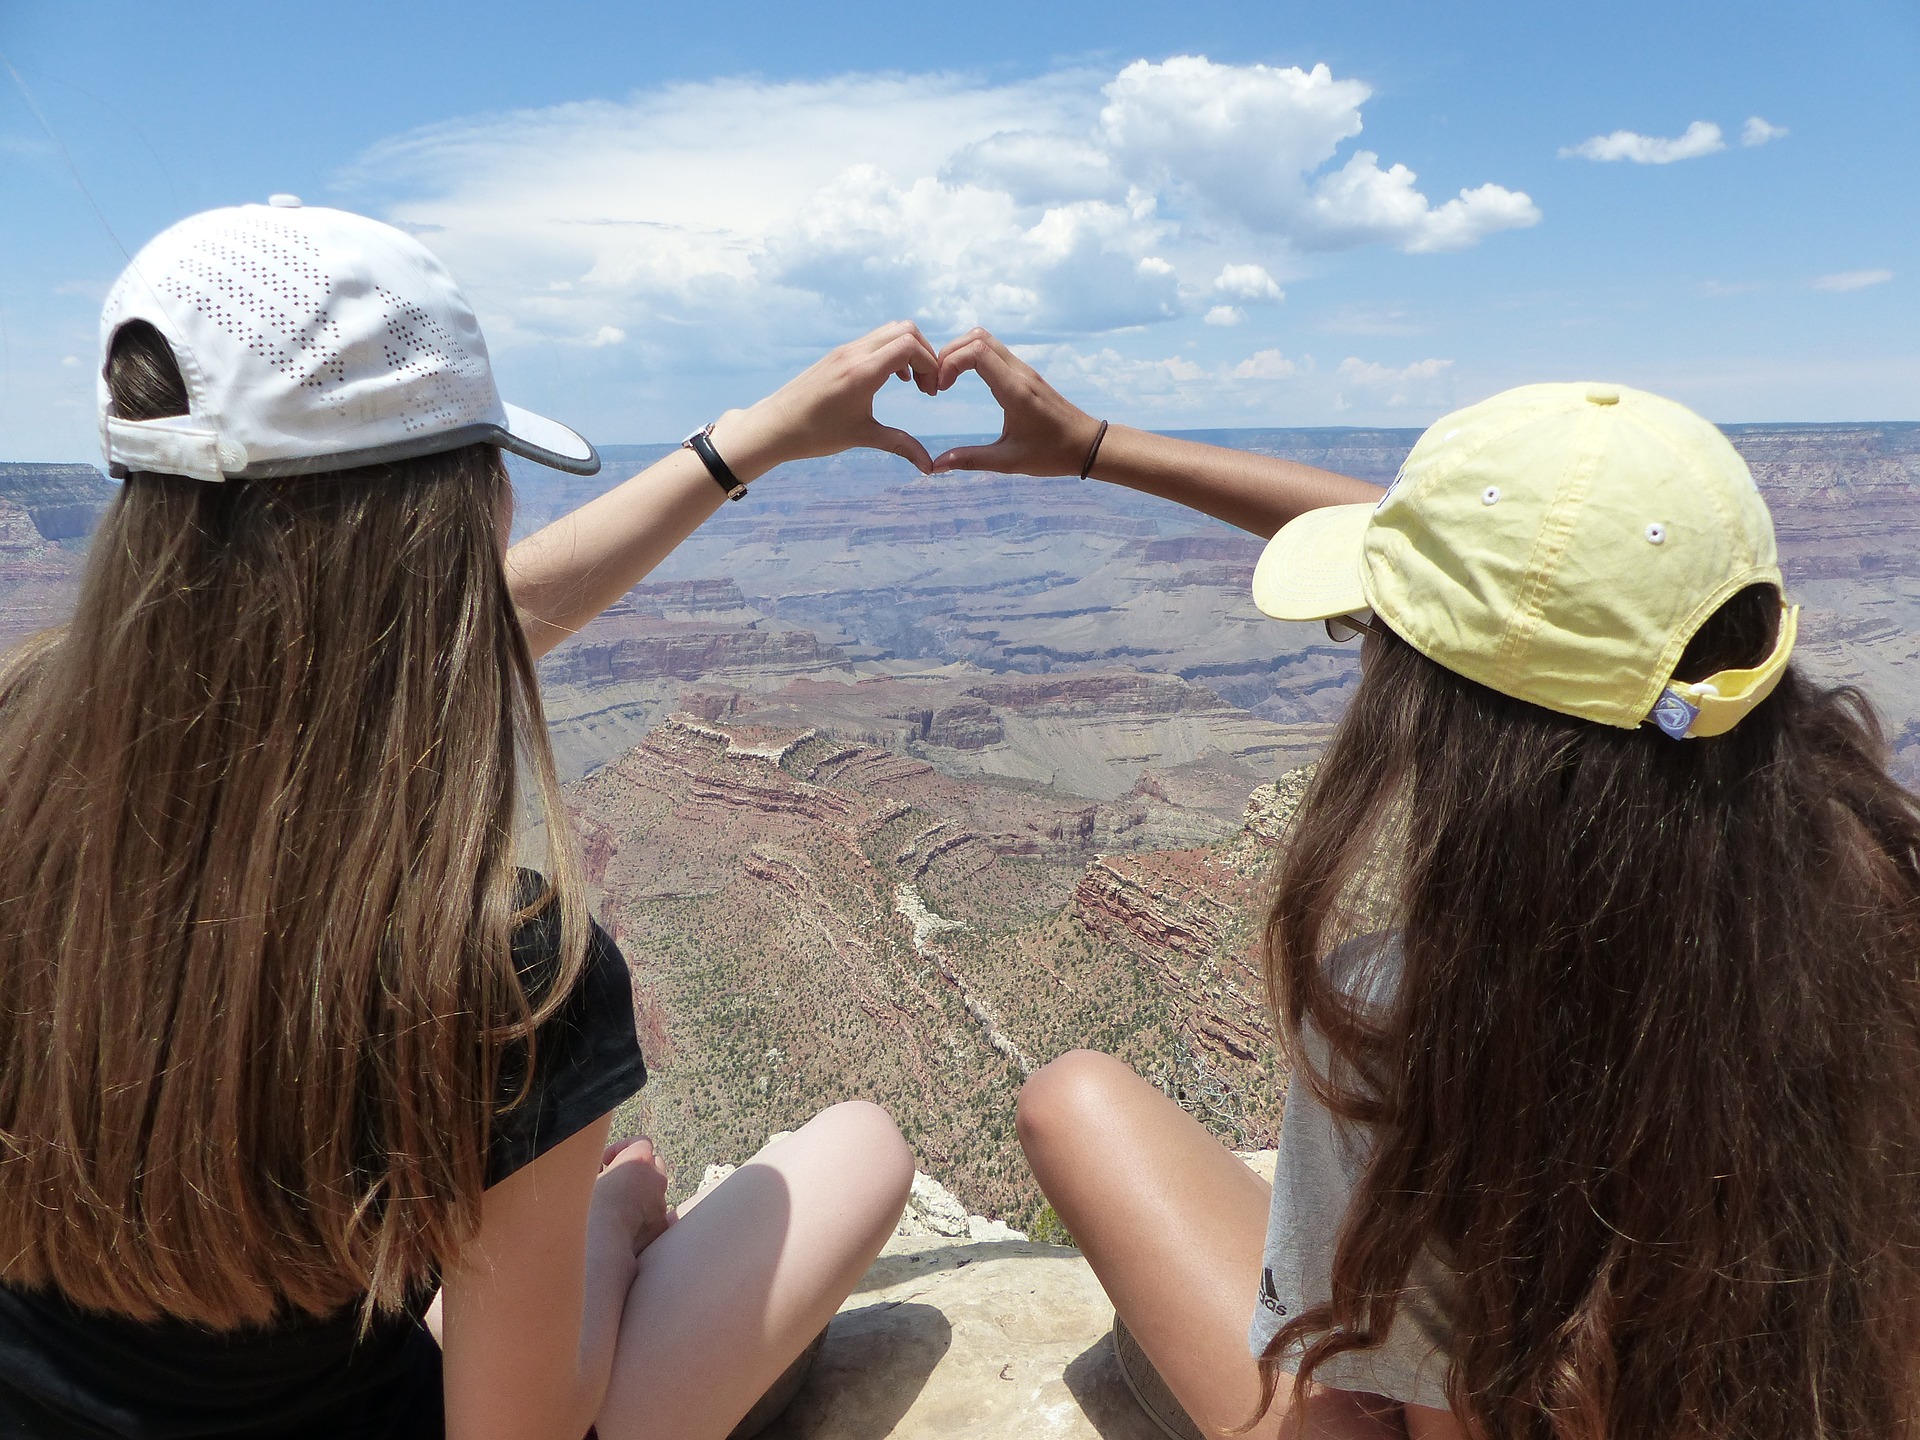 We love Arizona and the Grand Canyon